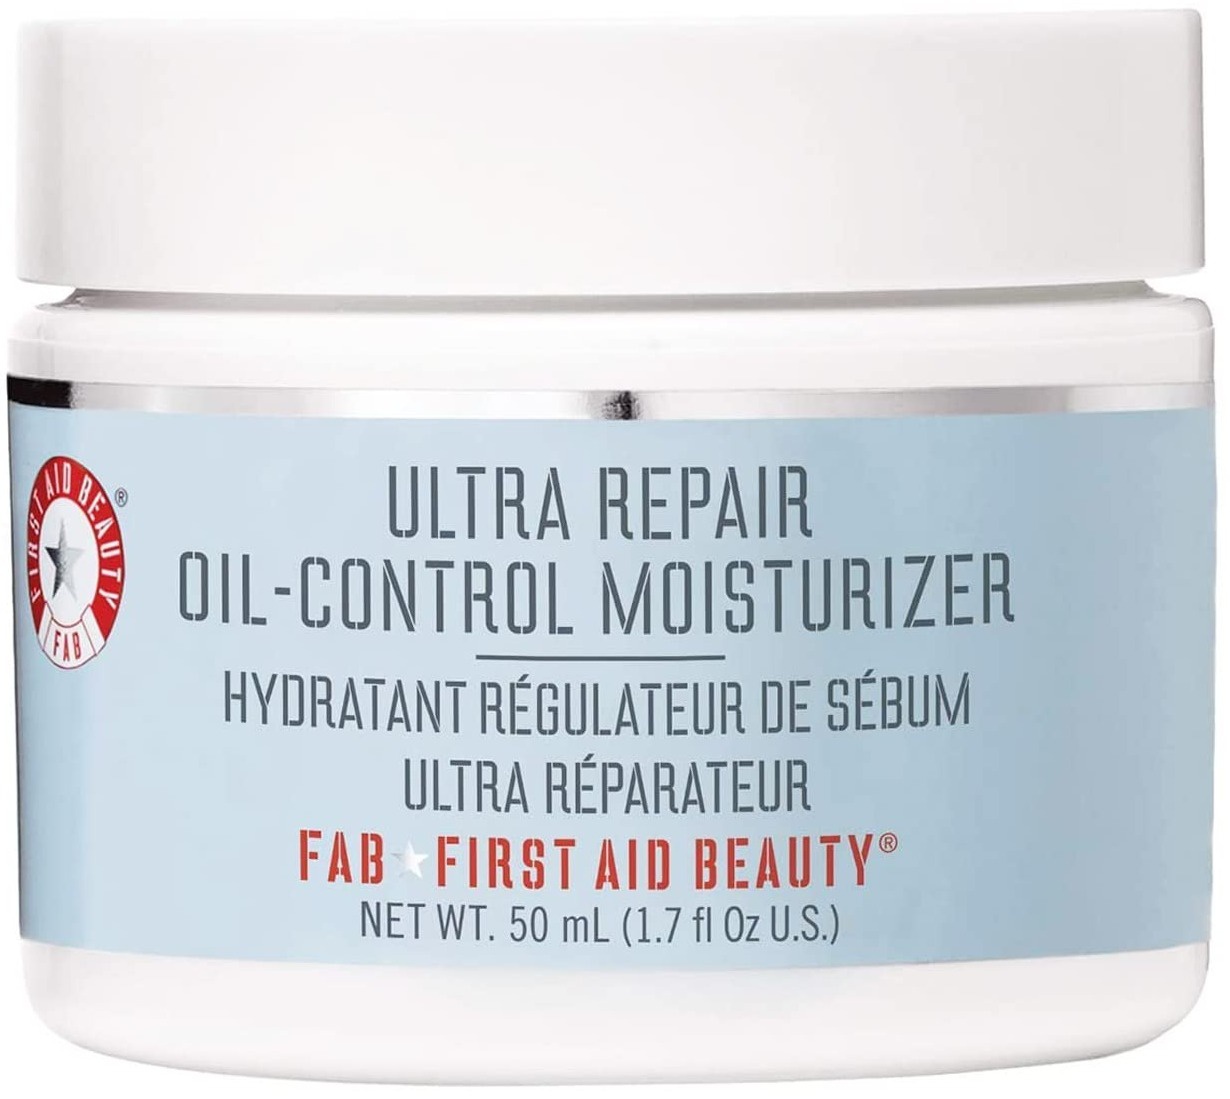 First Aid Beauty Ultra Repair Oil-control Moisturizer